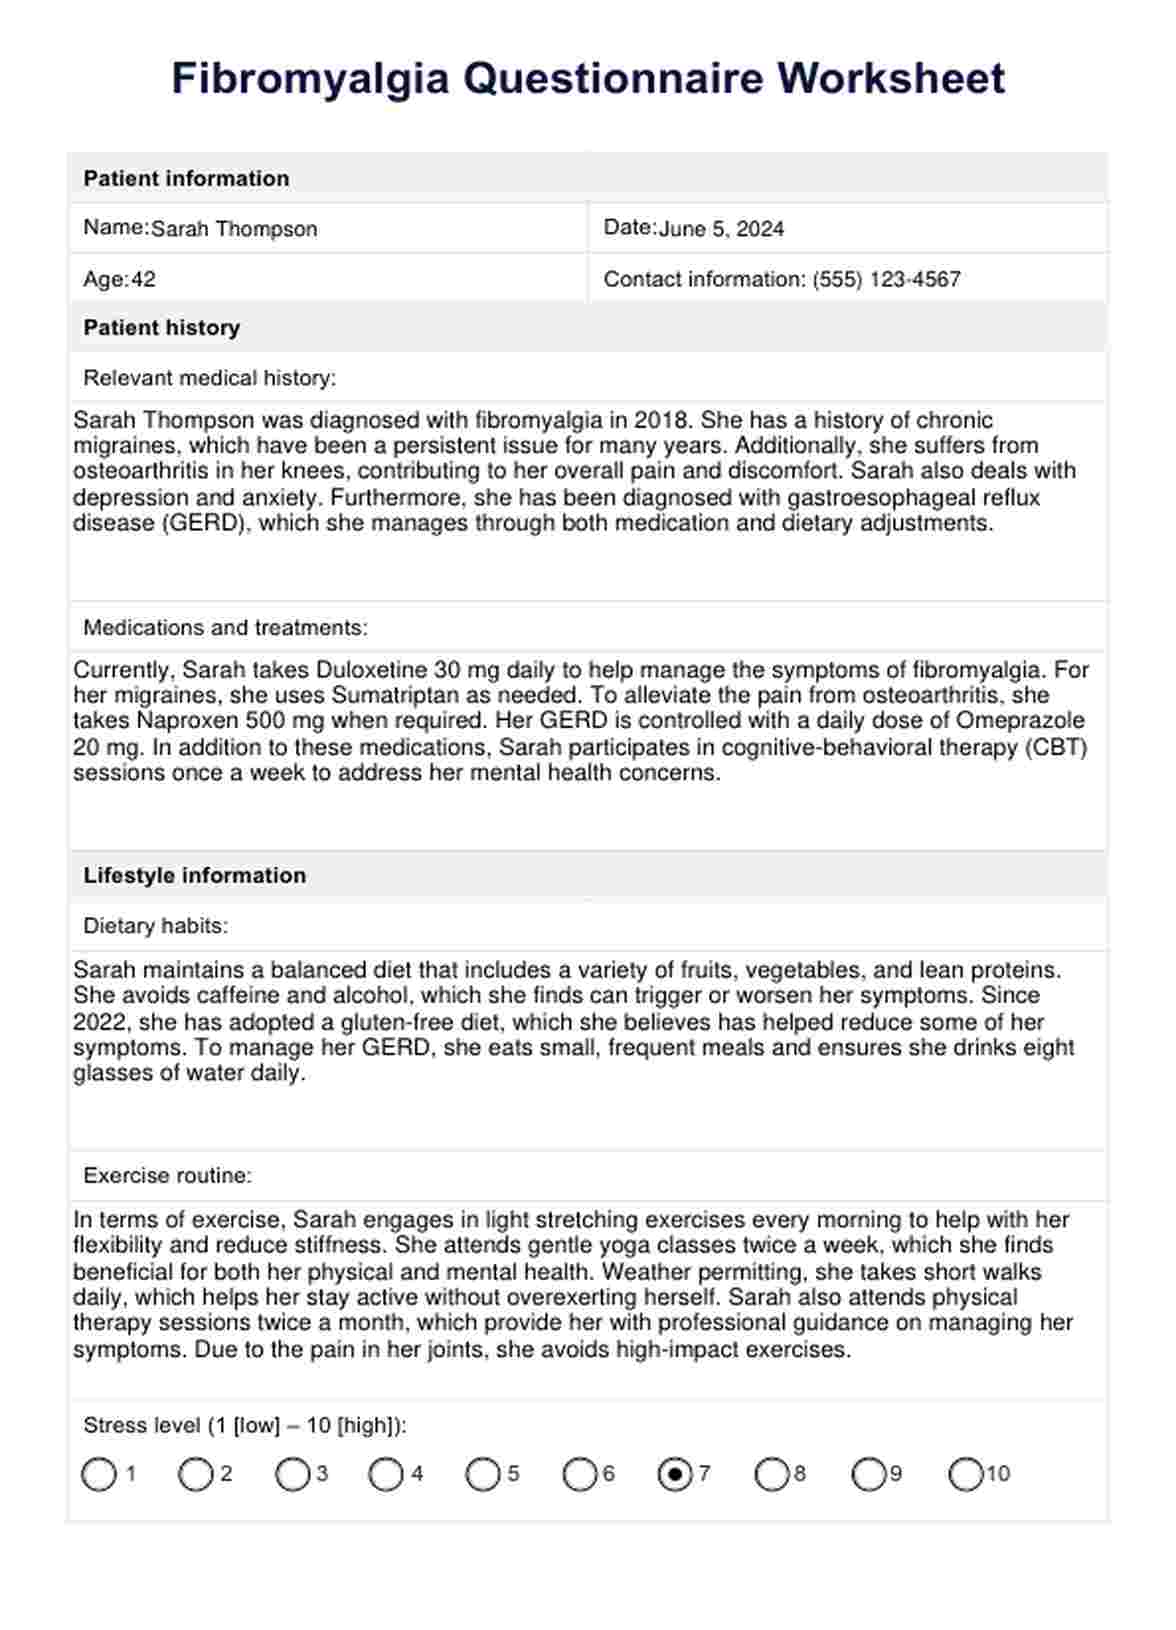 Fibromyalgia Questionnaire Worksheet PDF Example